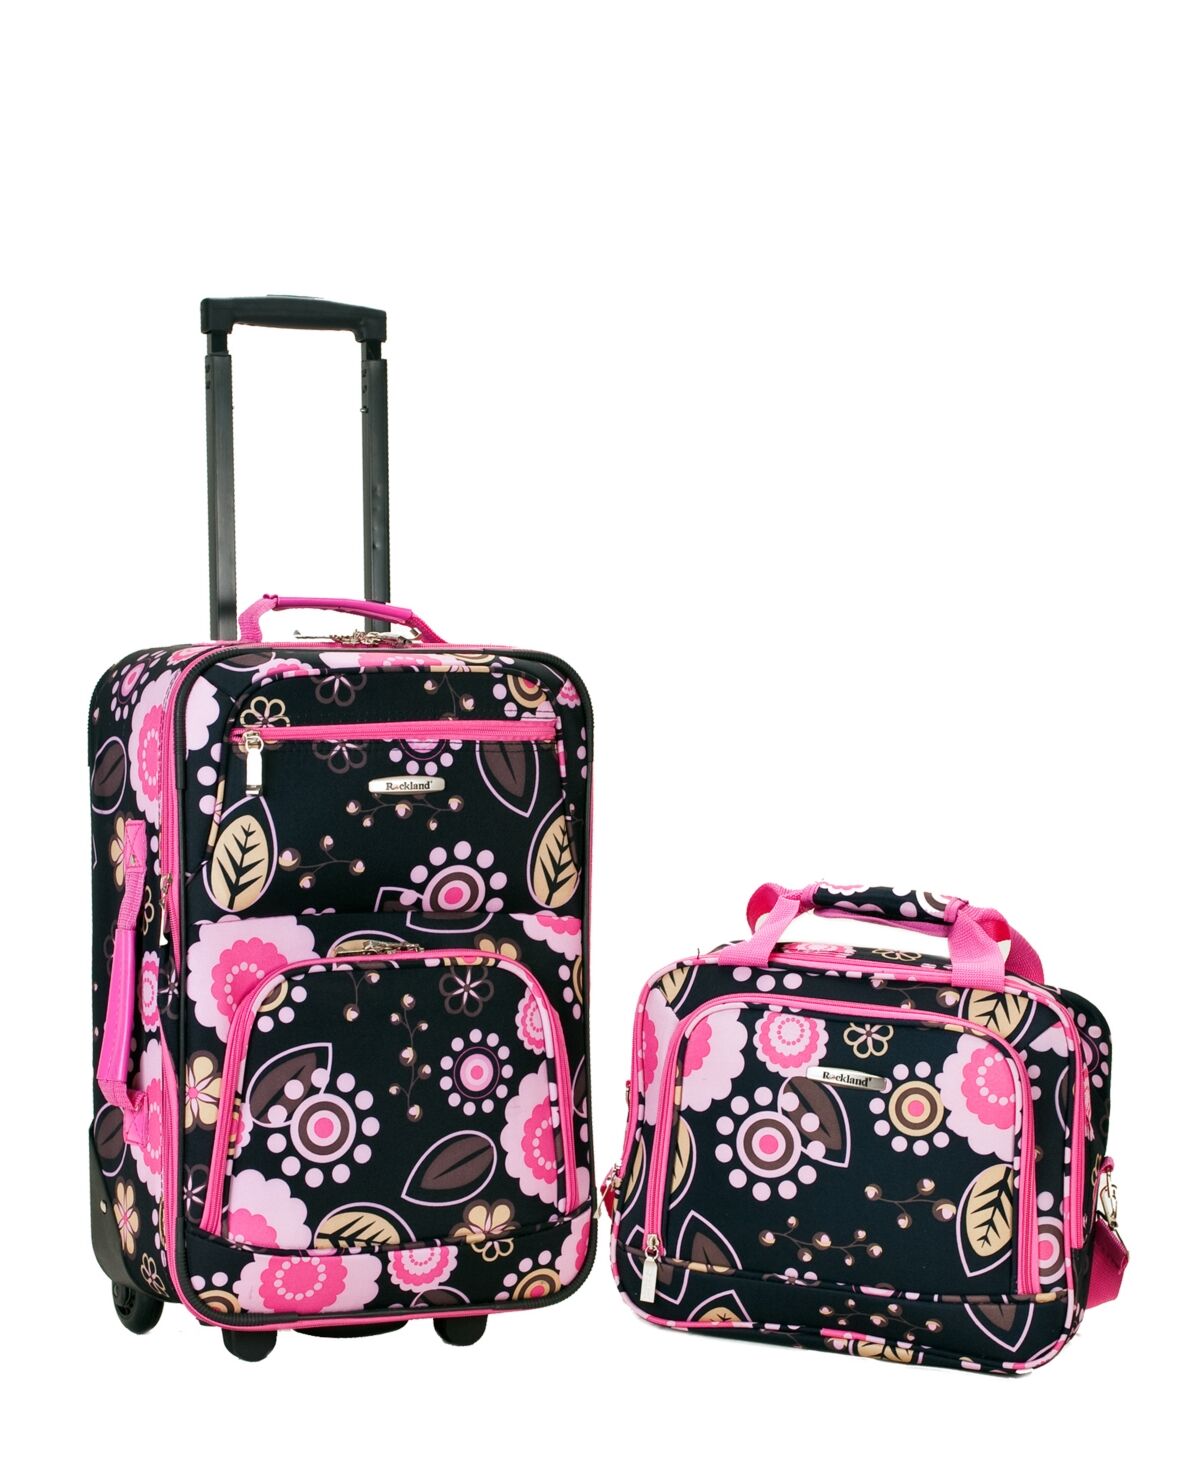 Rockland 2-Pc. Pattern Softside Luggage Set - Black  Pink Floral